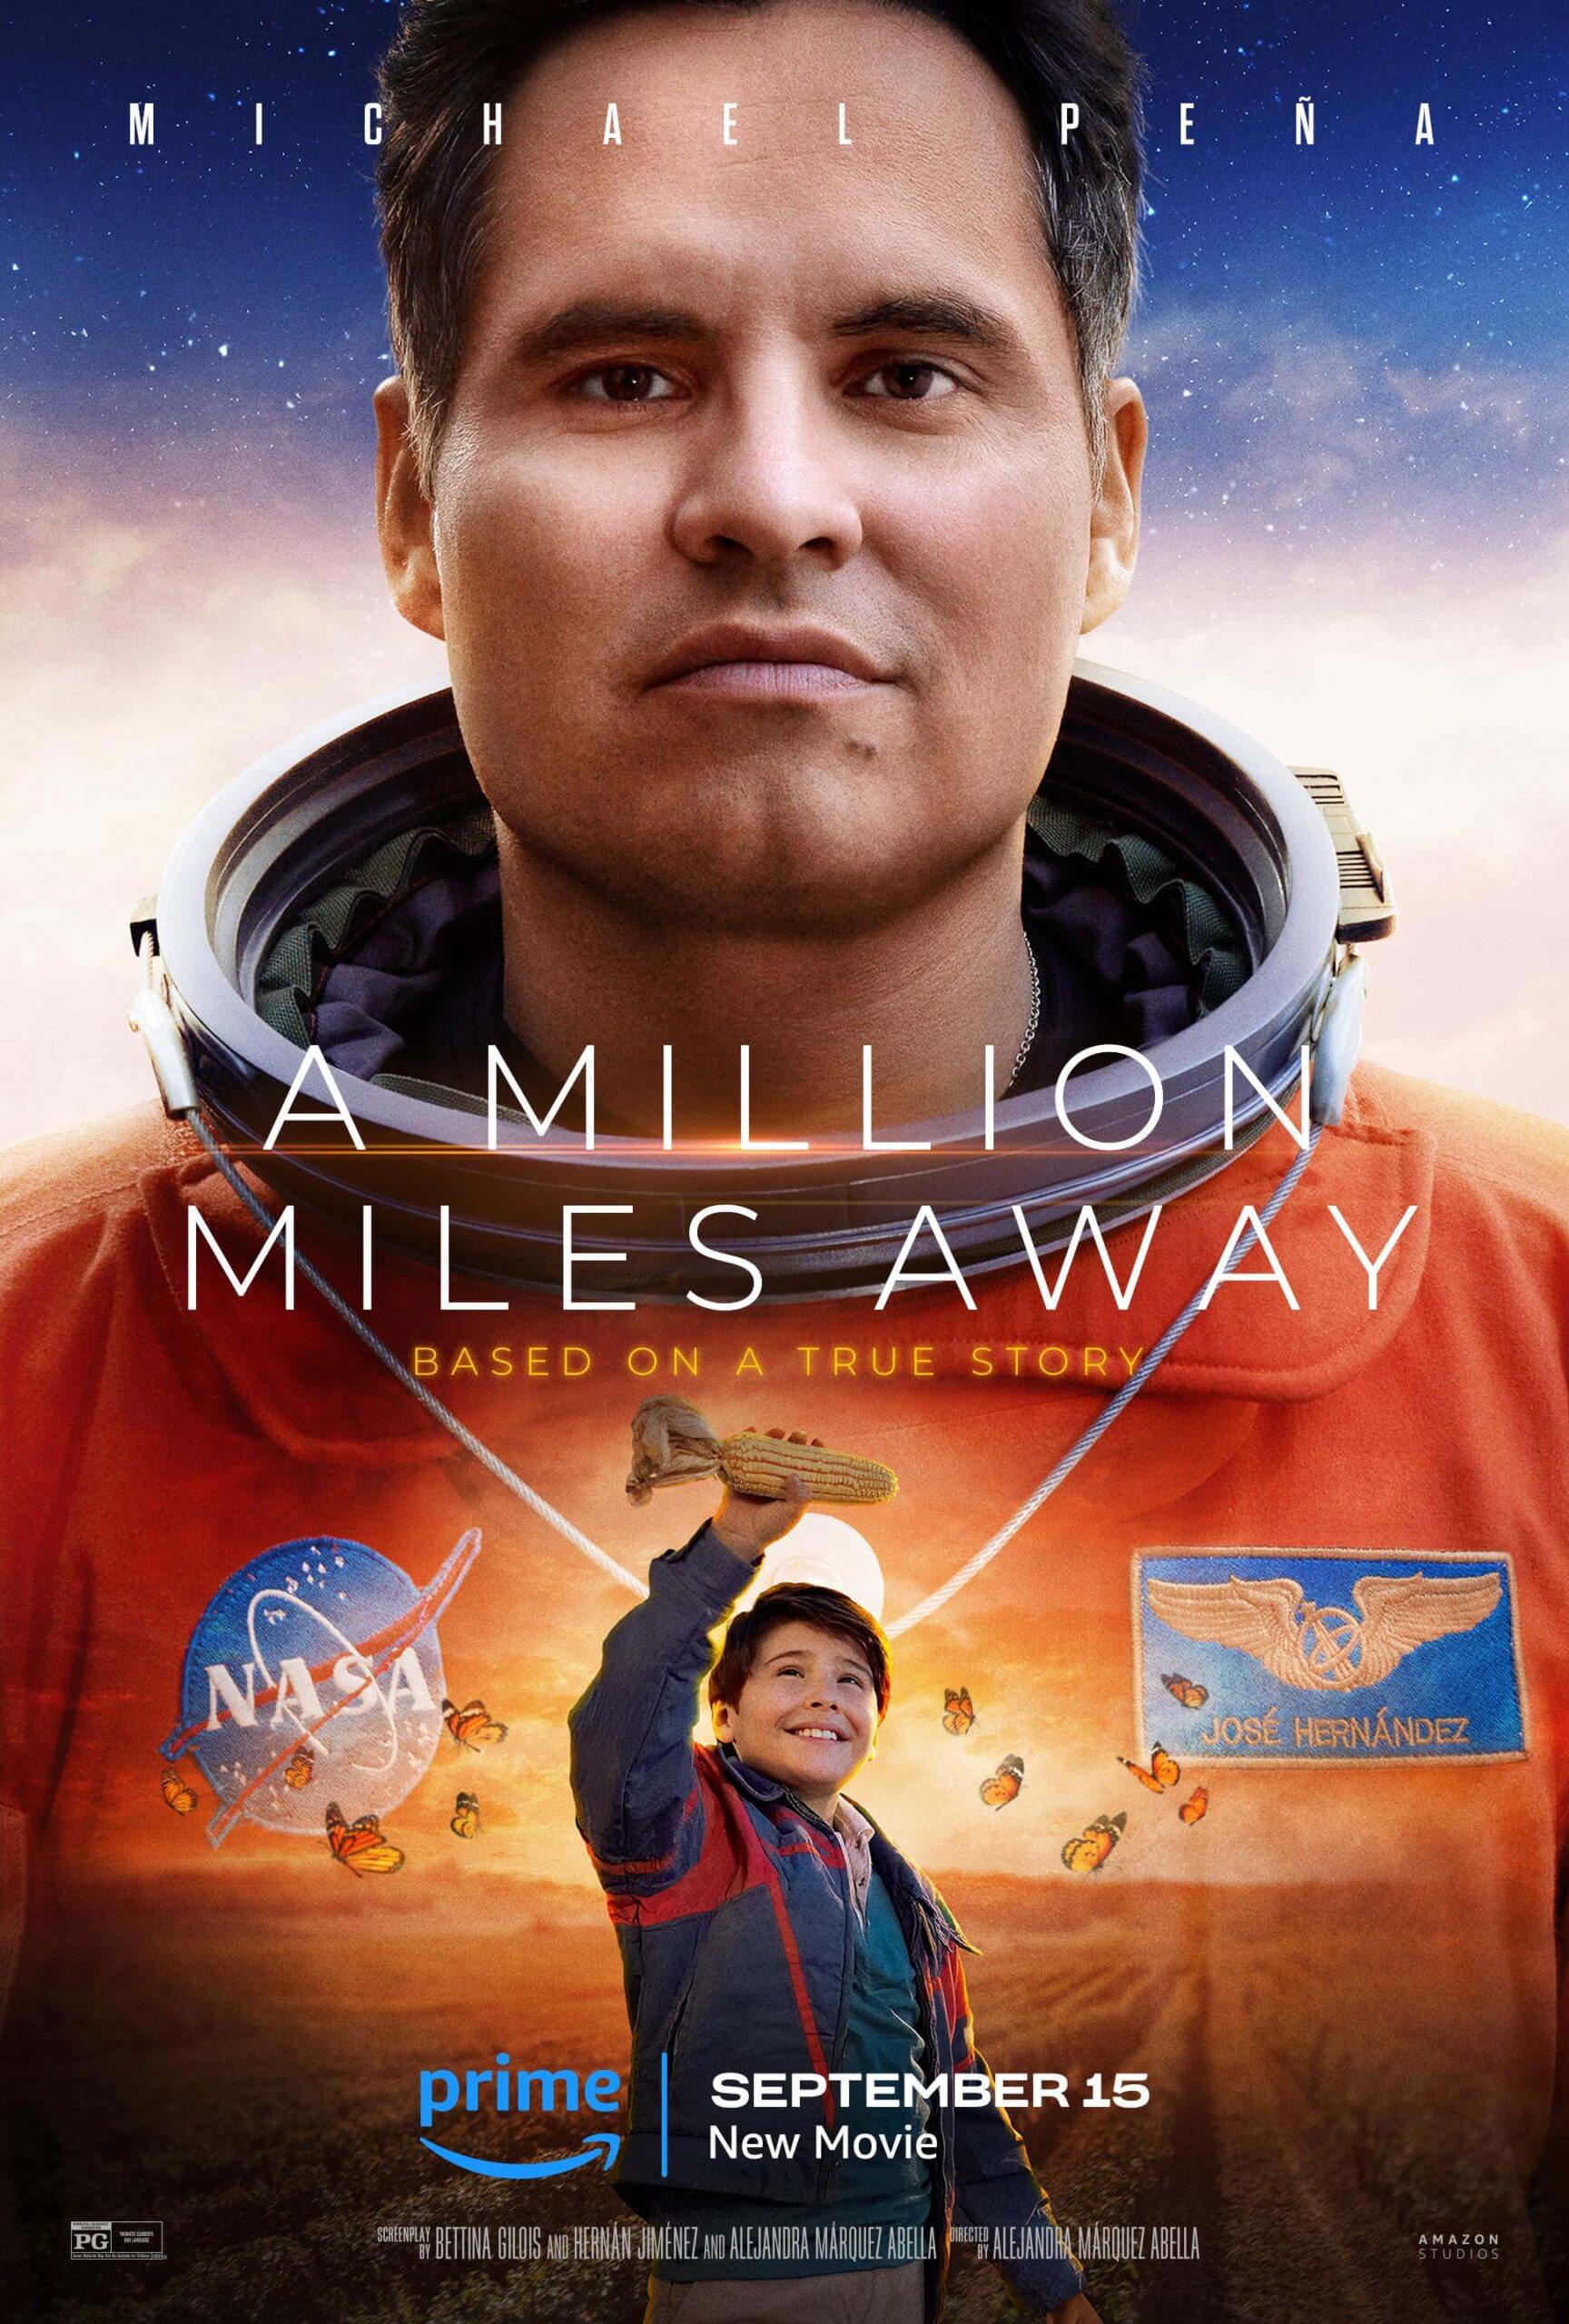 A Million Miles Away Movie Poster